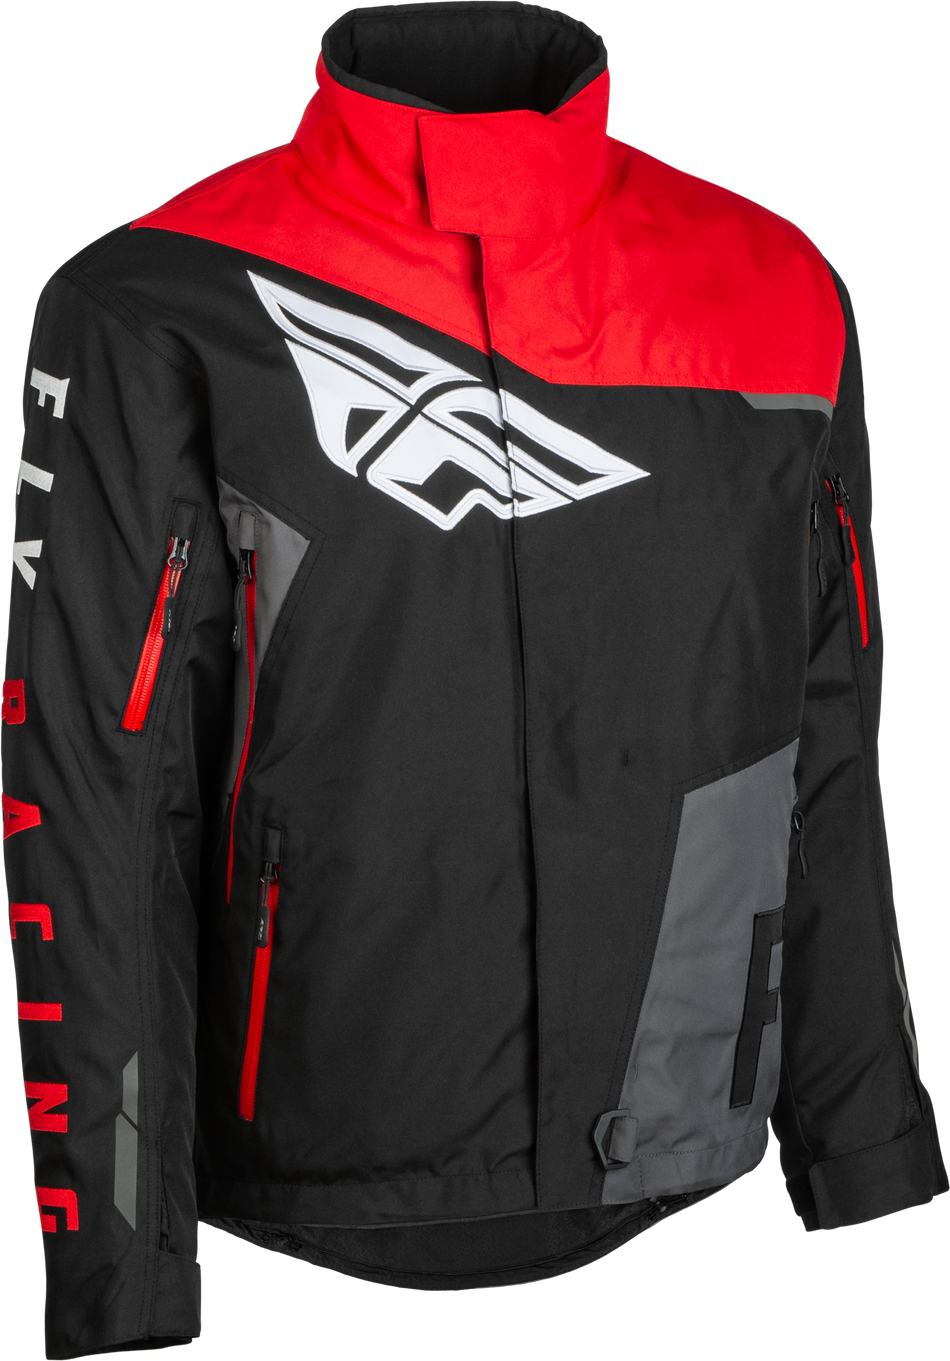 FLY RACING Snx Pro Jacket Black/Grey/Red Lg 470-4117L